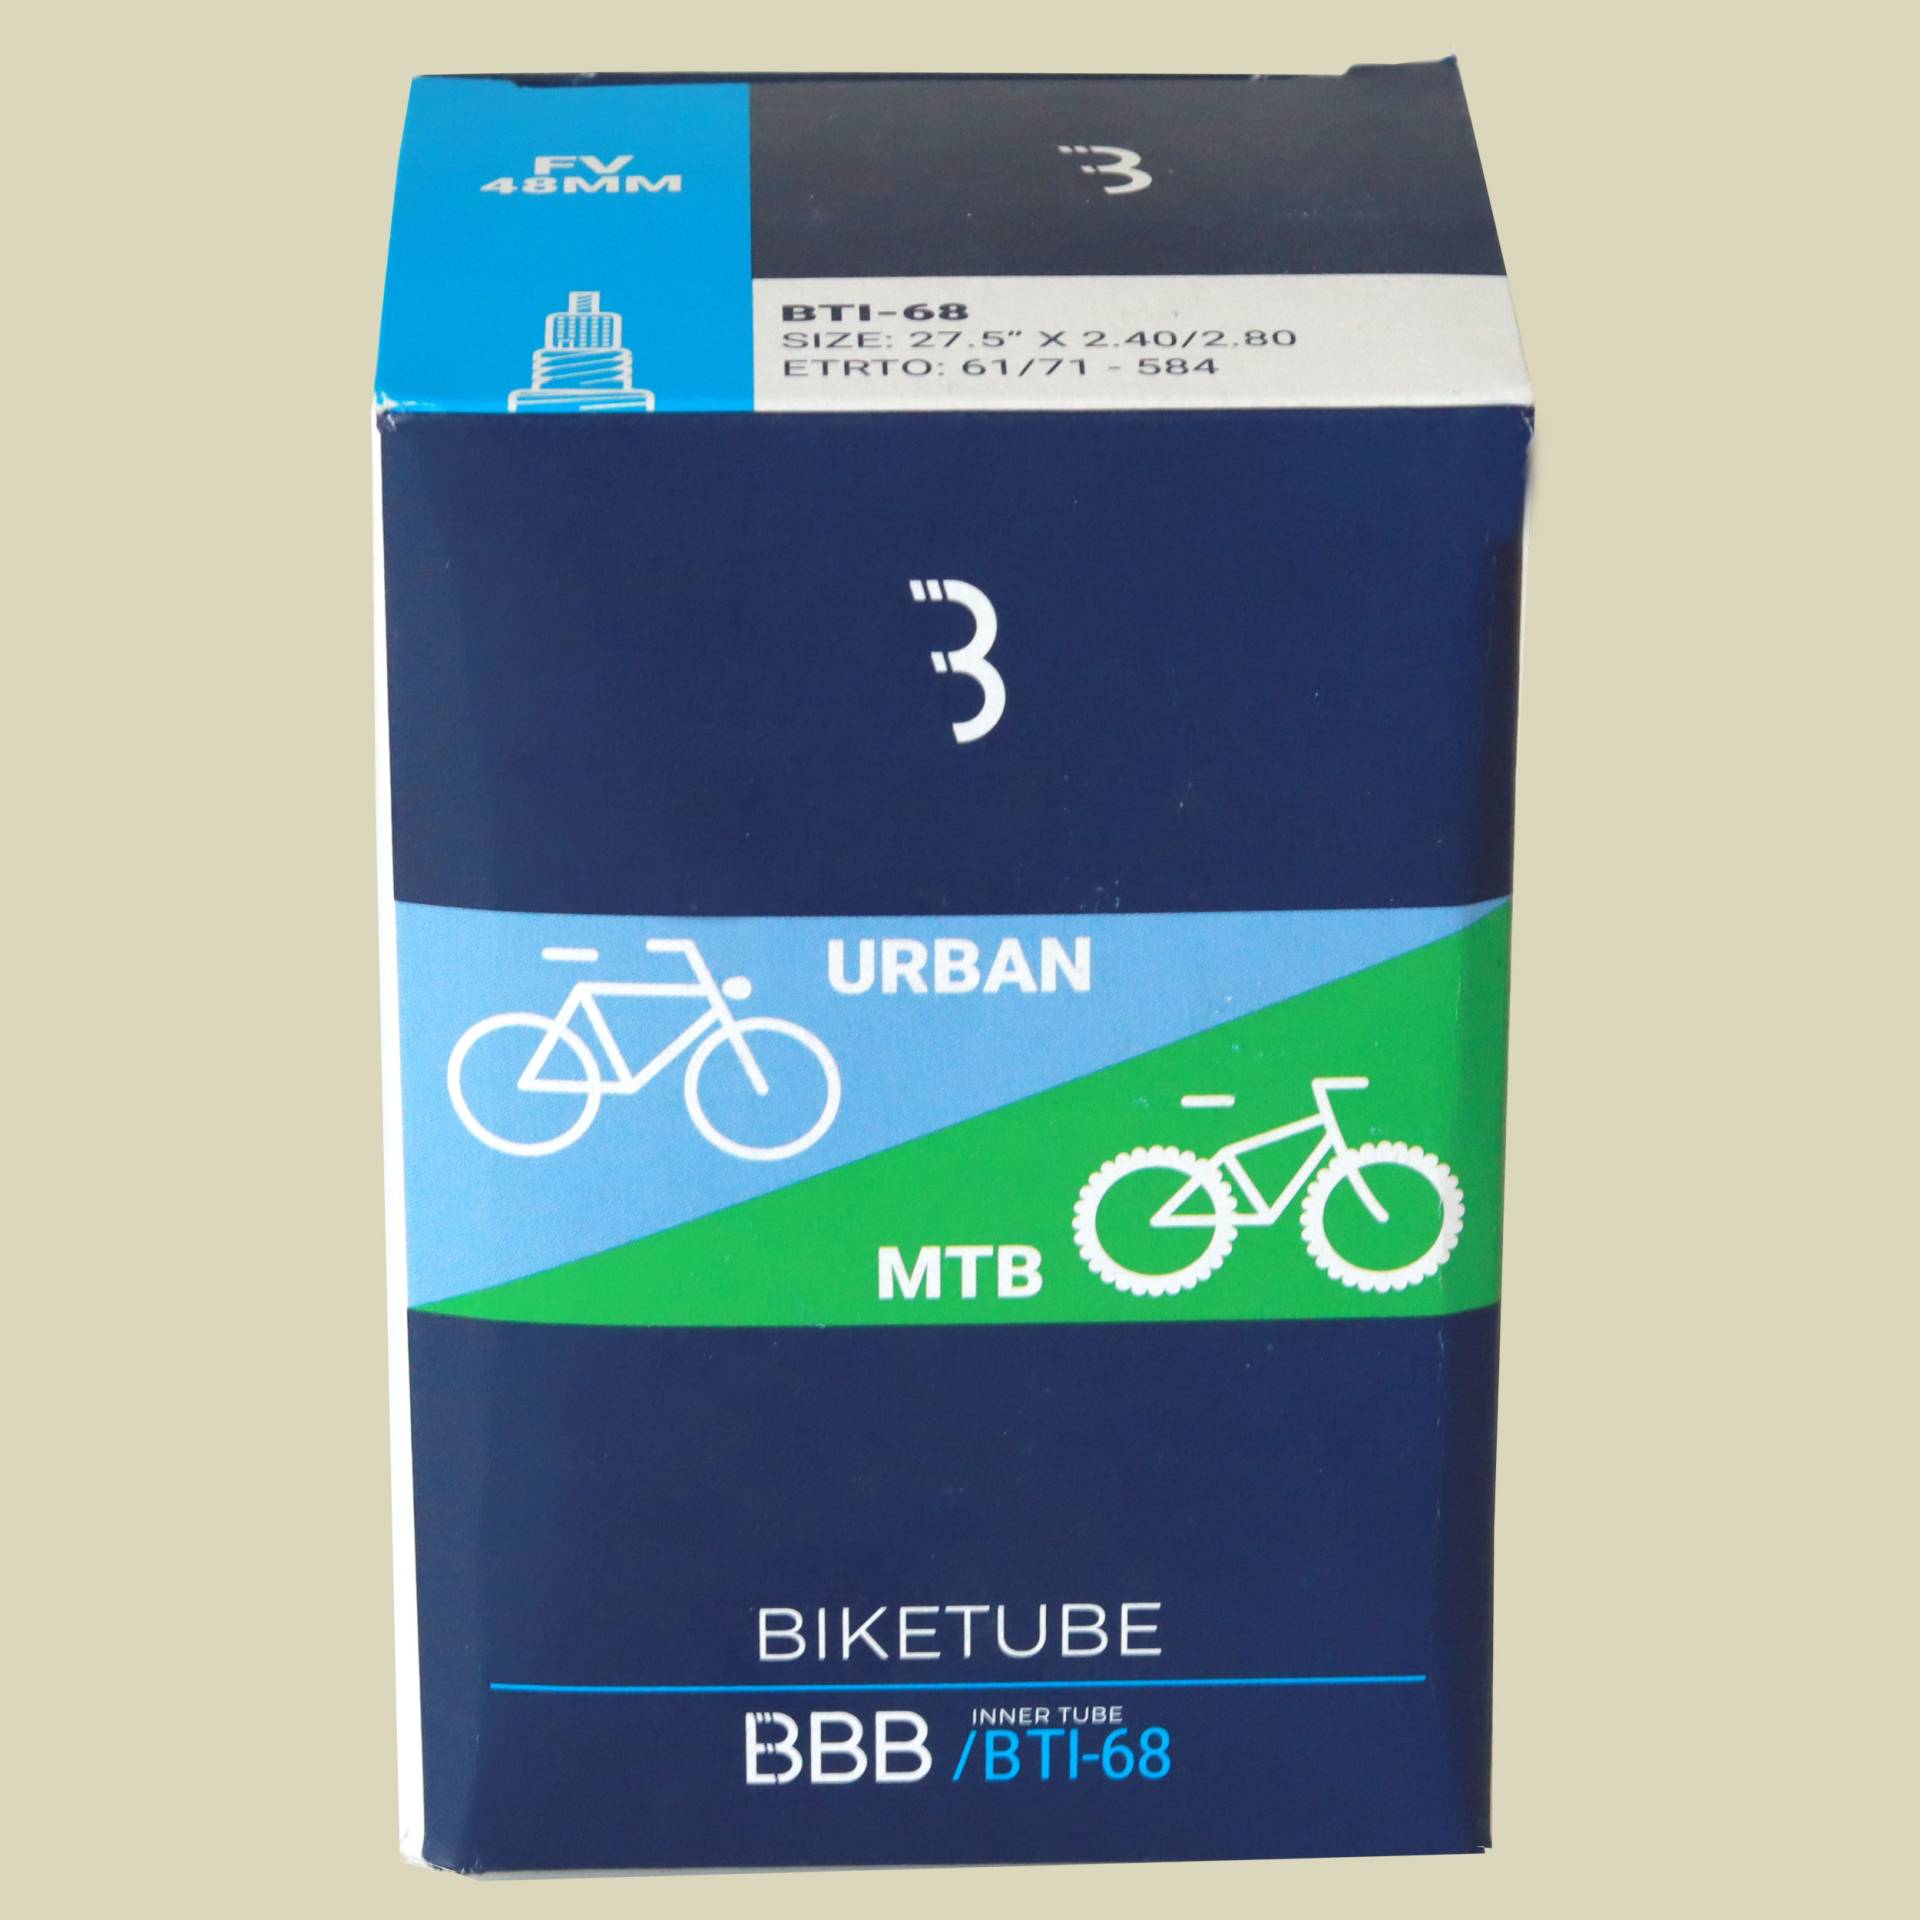 BTI-68 BikeTube 27,5  FV 27.5" x 2.40/2.80 von BBB Cycling